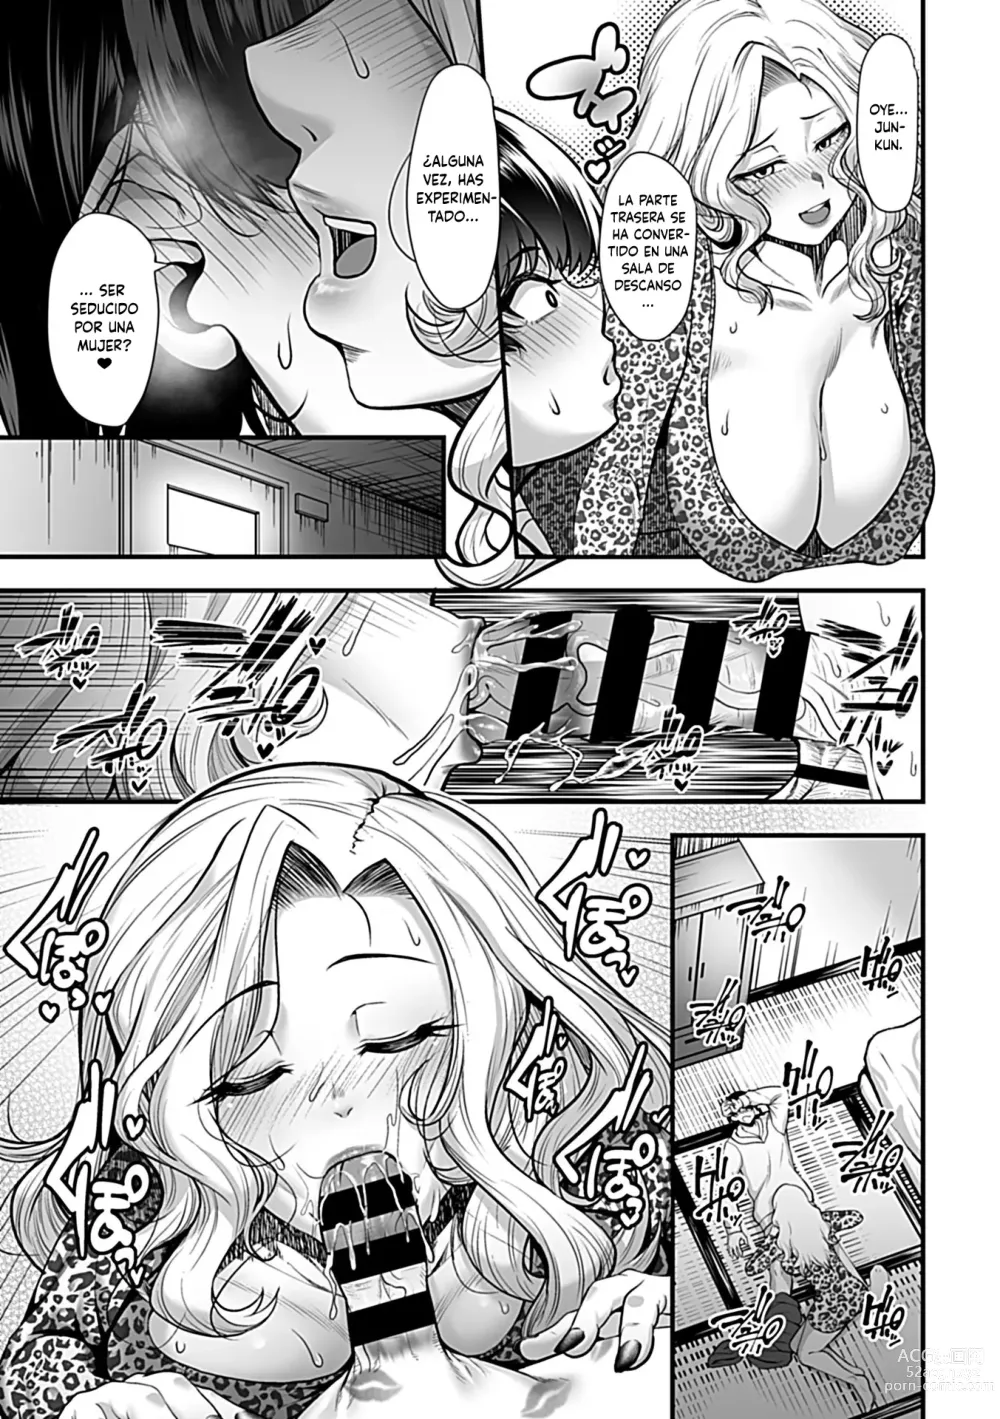 Page 4 of manga El Obsceno Revoloteo de la Camarera